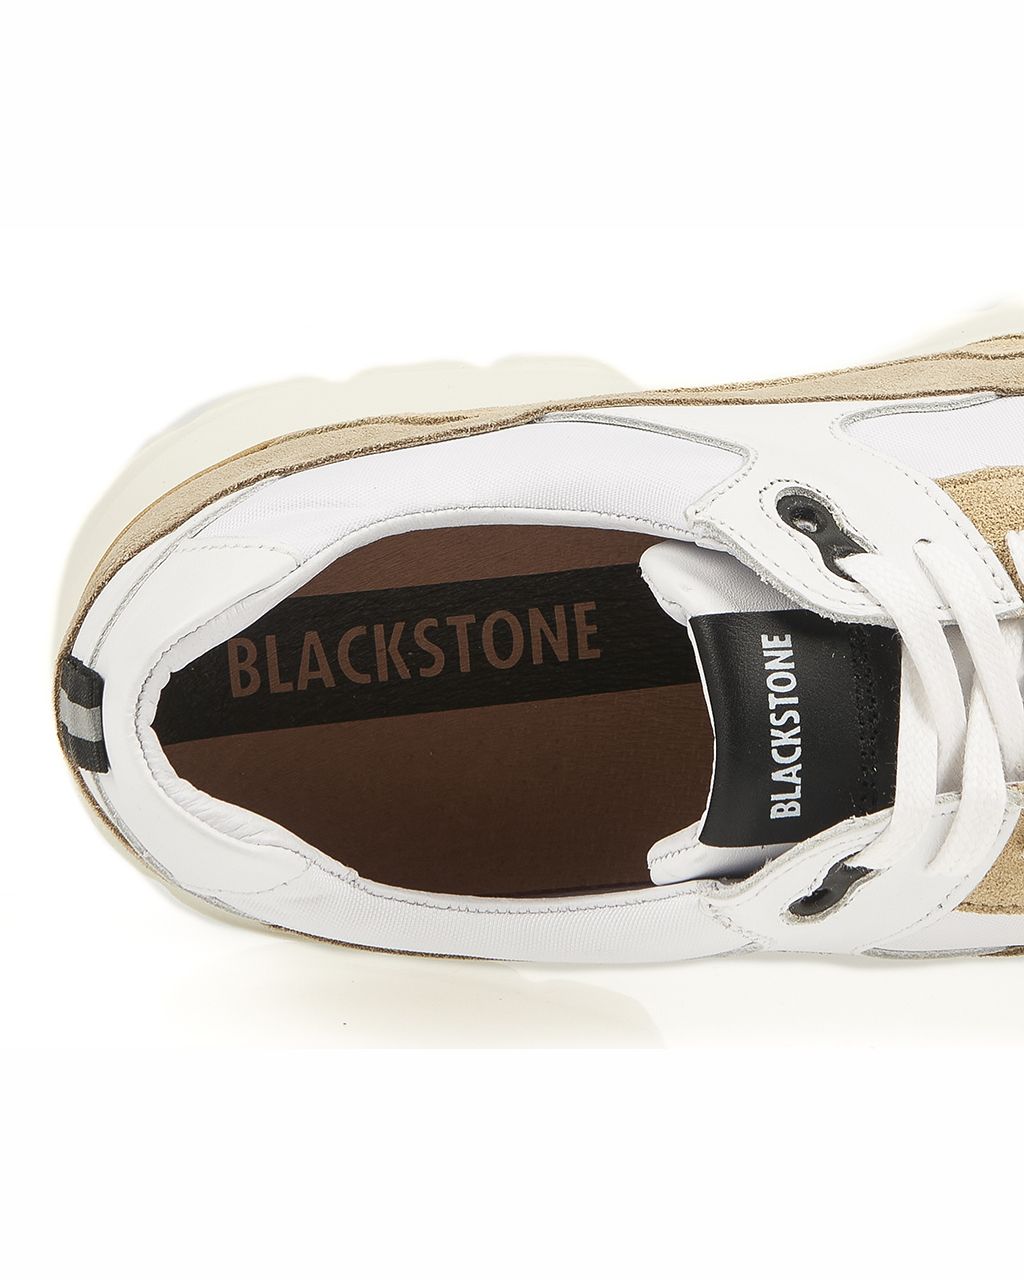 Blackstone XG14 Sneakers Sand 076423-001-41